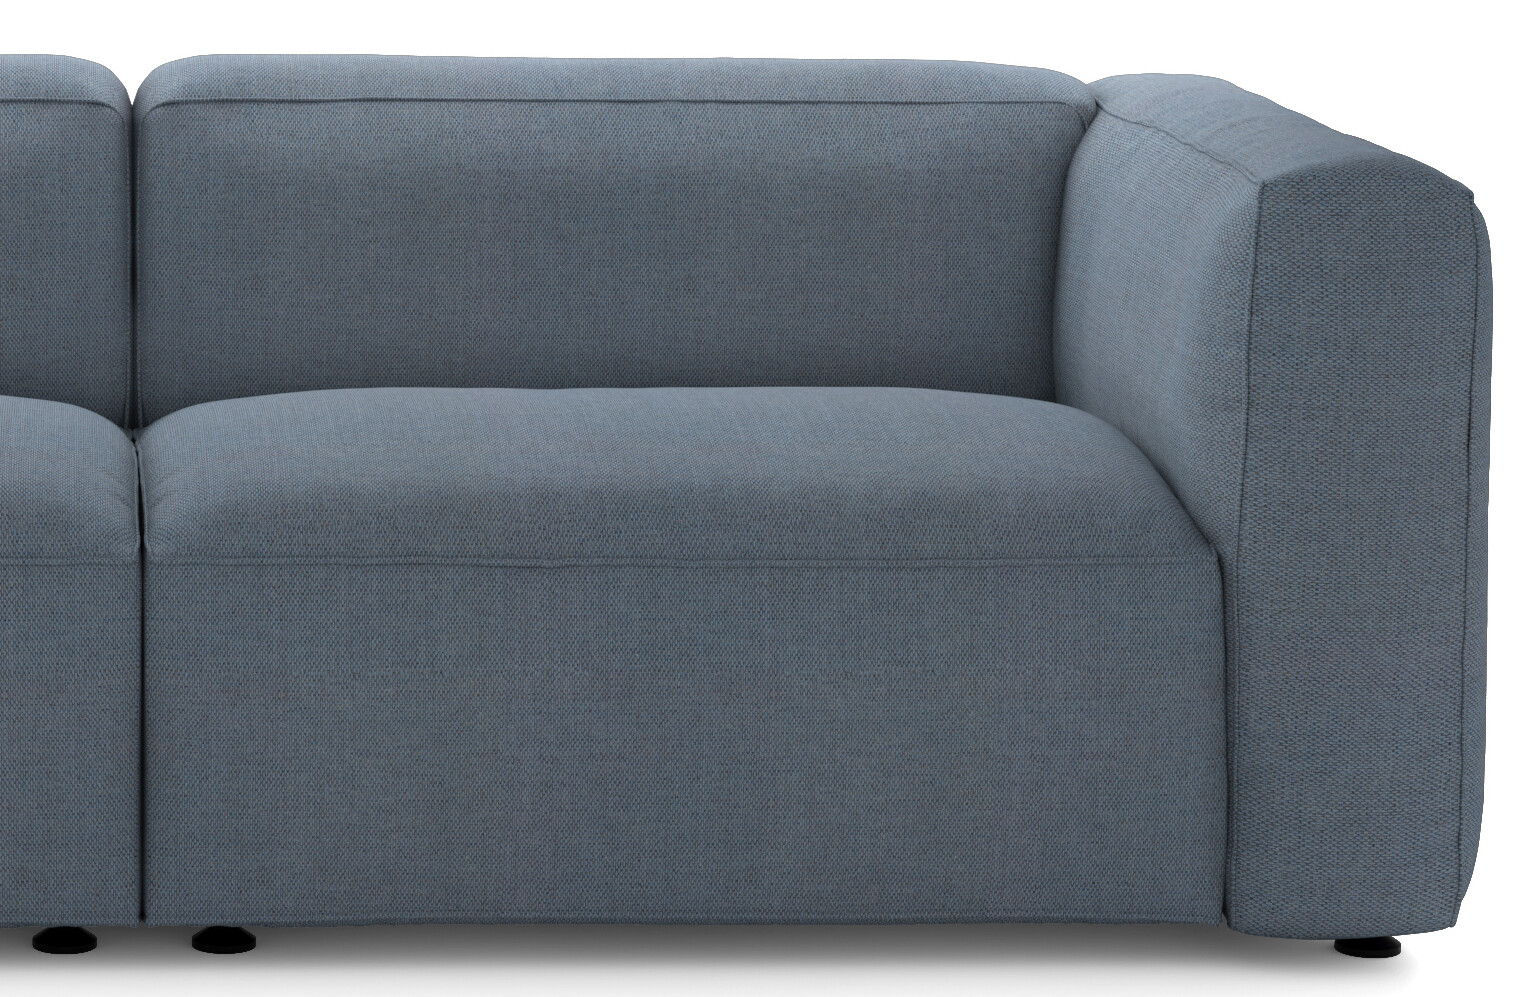 Make Nordic Sofa